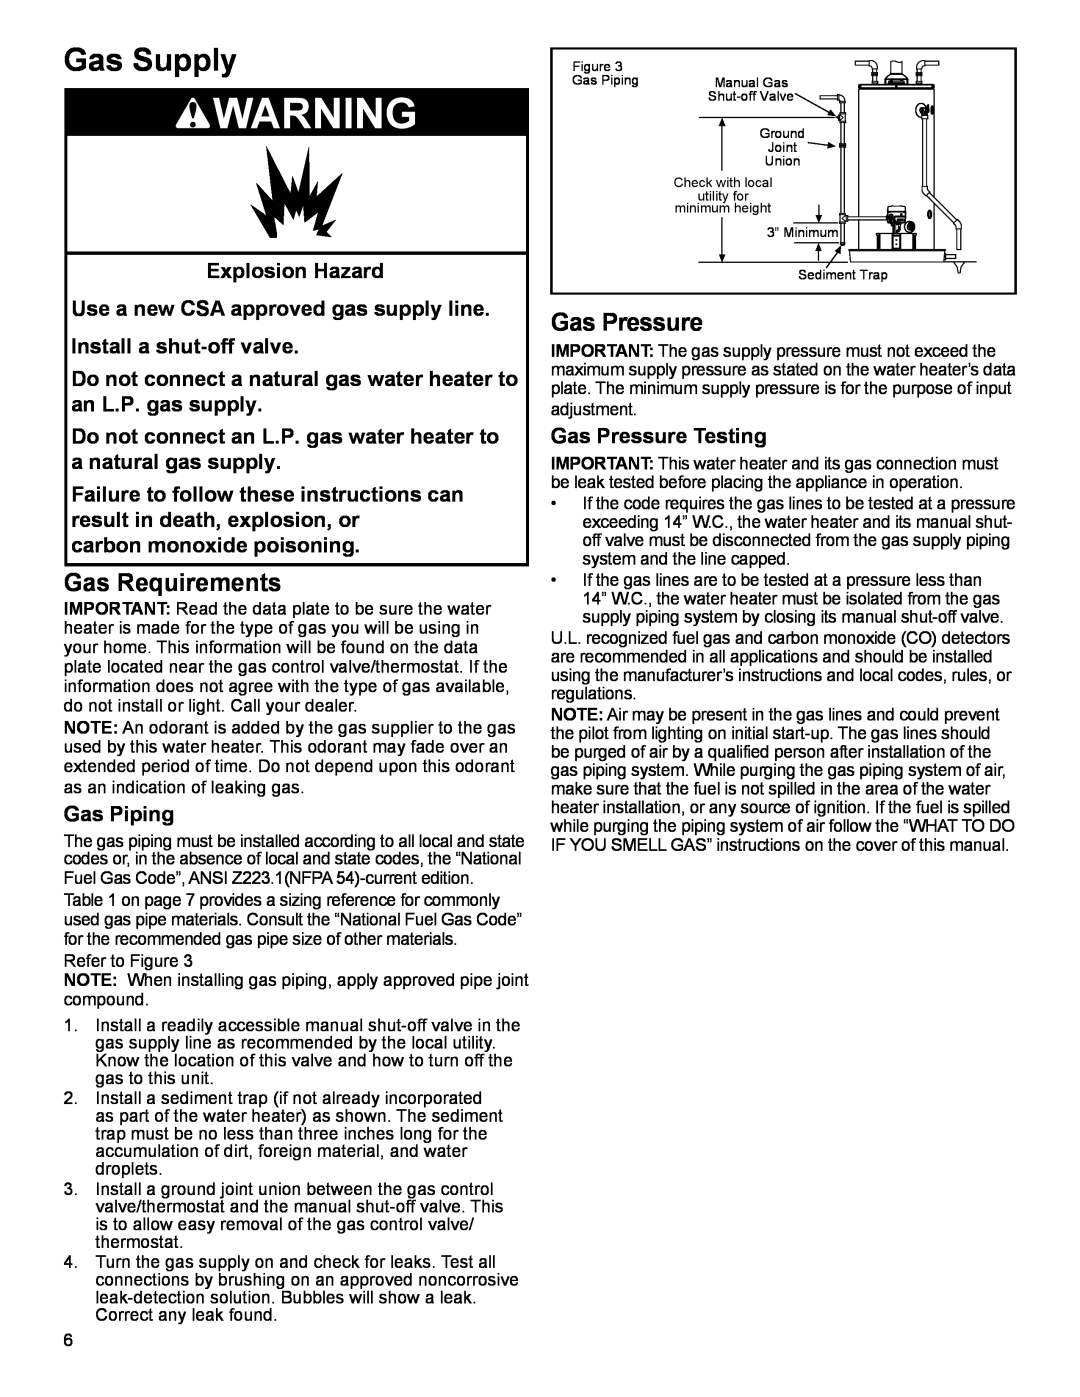 American Water Heater 318935-003 Gas Supply, Gas Requirements, Gas Pressure, Explosion Hazard, carbon monoxide poisoning 